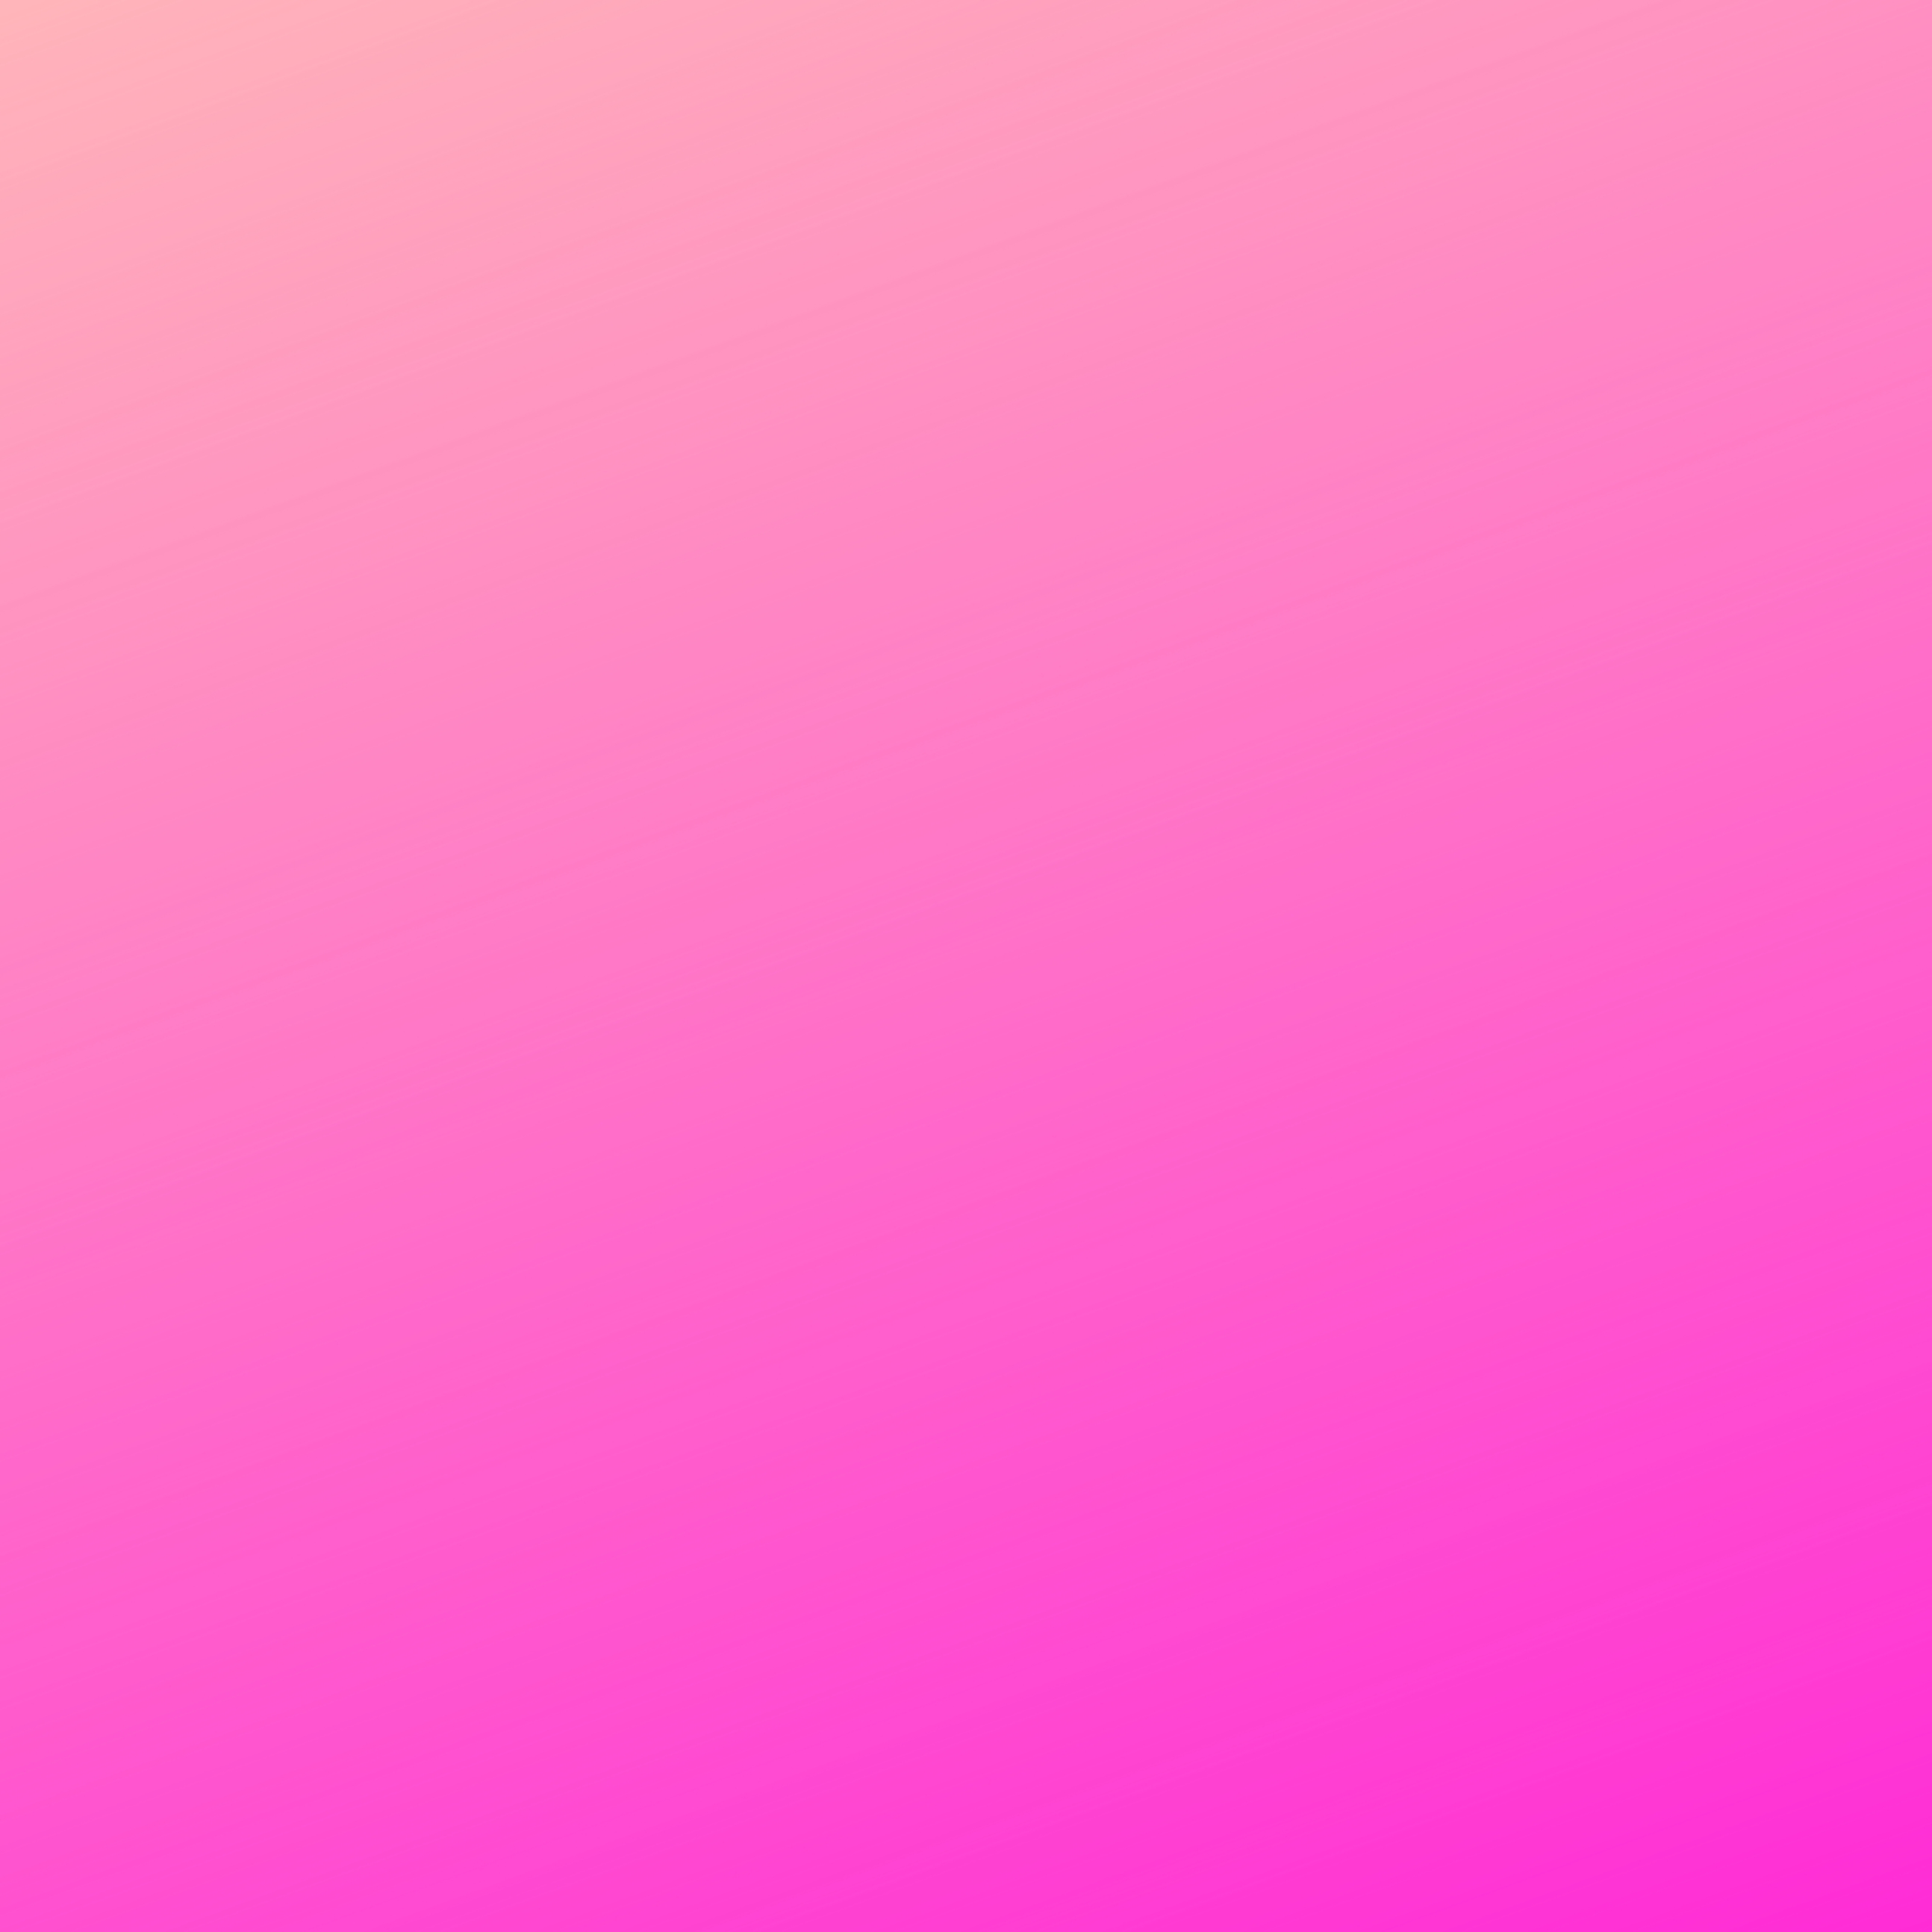 iPad Wallpapers Pink Gradient Background iPad Wallpaper 3208x3208 px